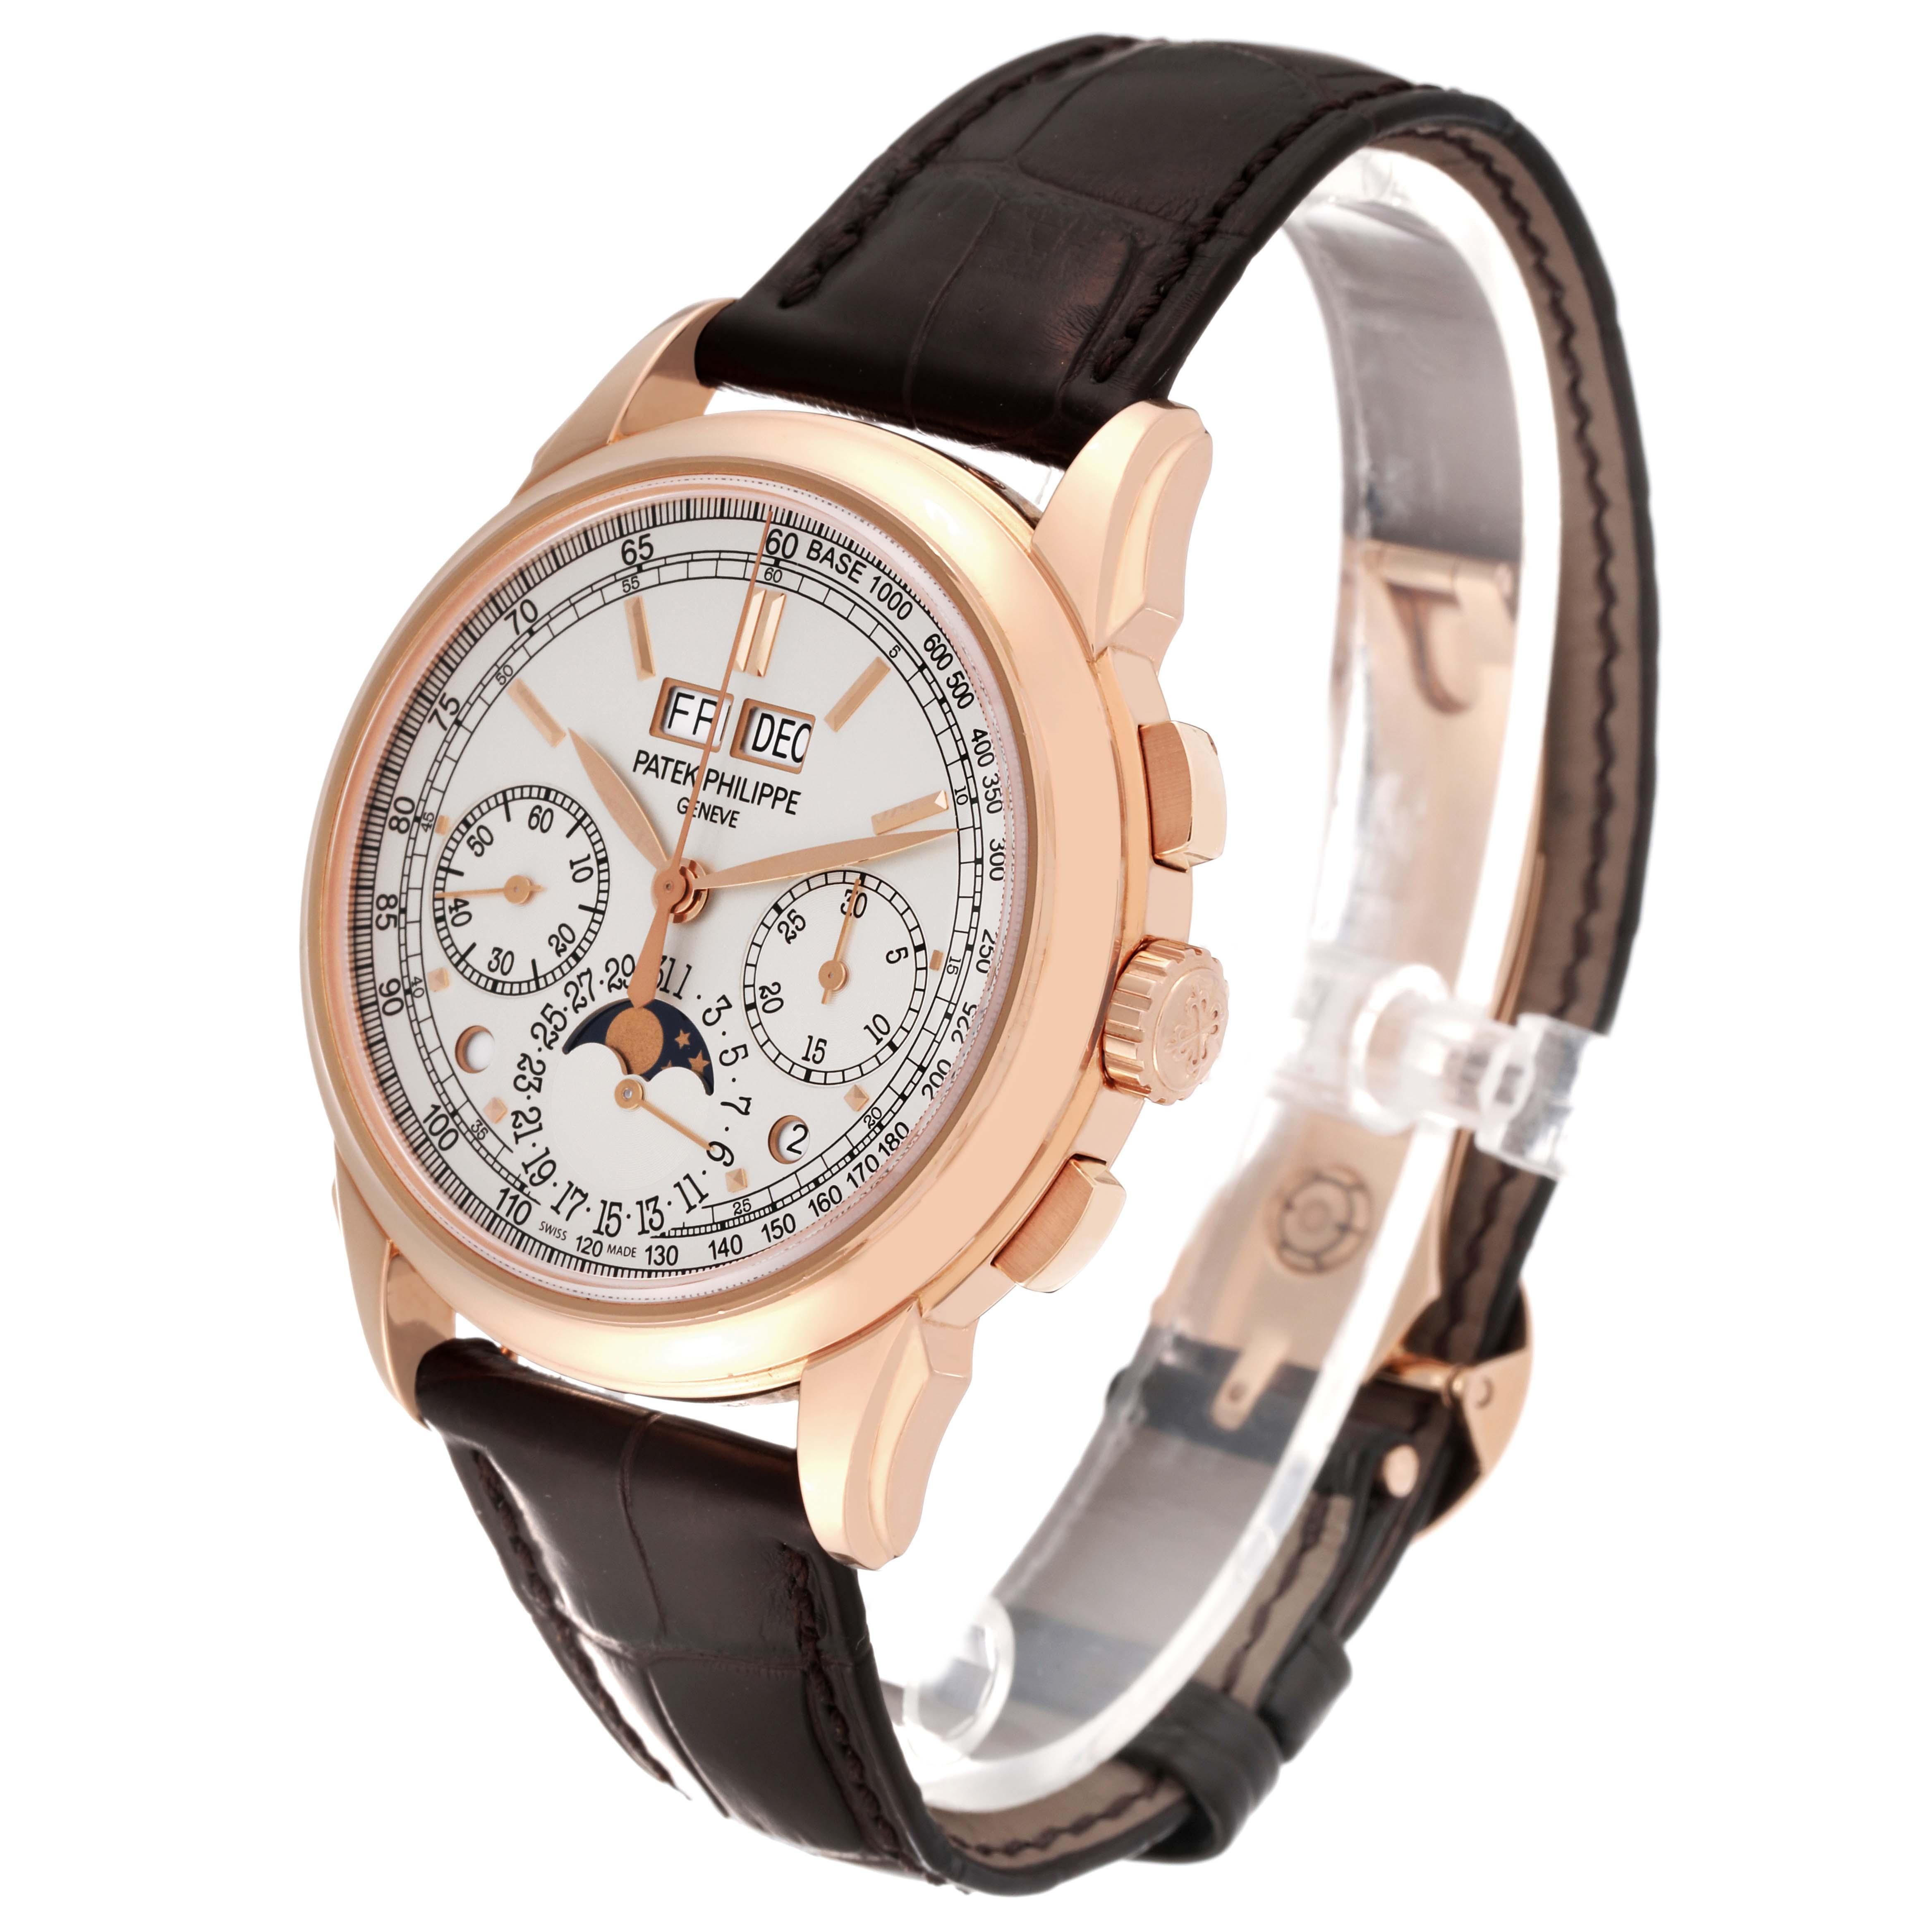 Patek Philippe Grand Complications Perpetual Calendar Rose Gold Watch 5270 1